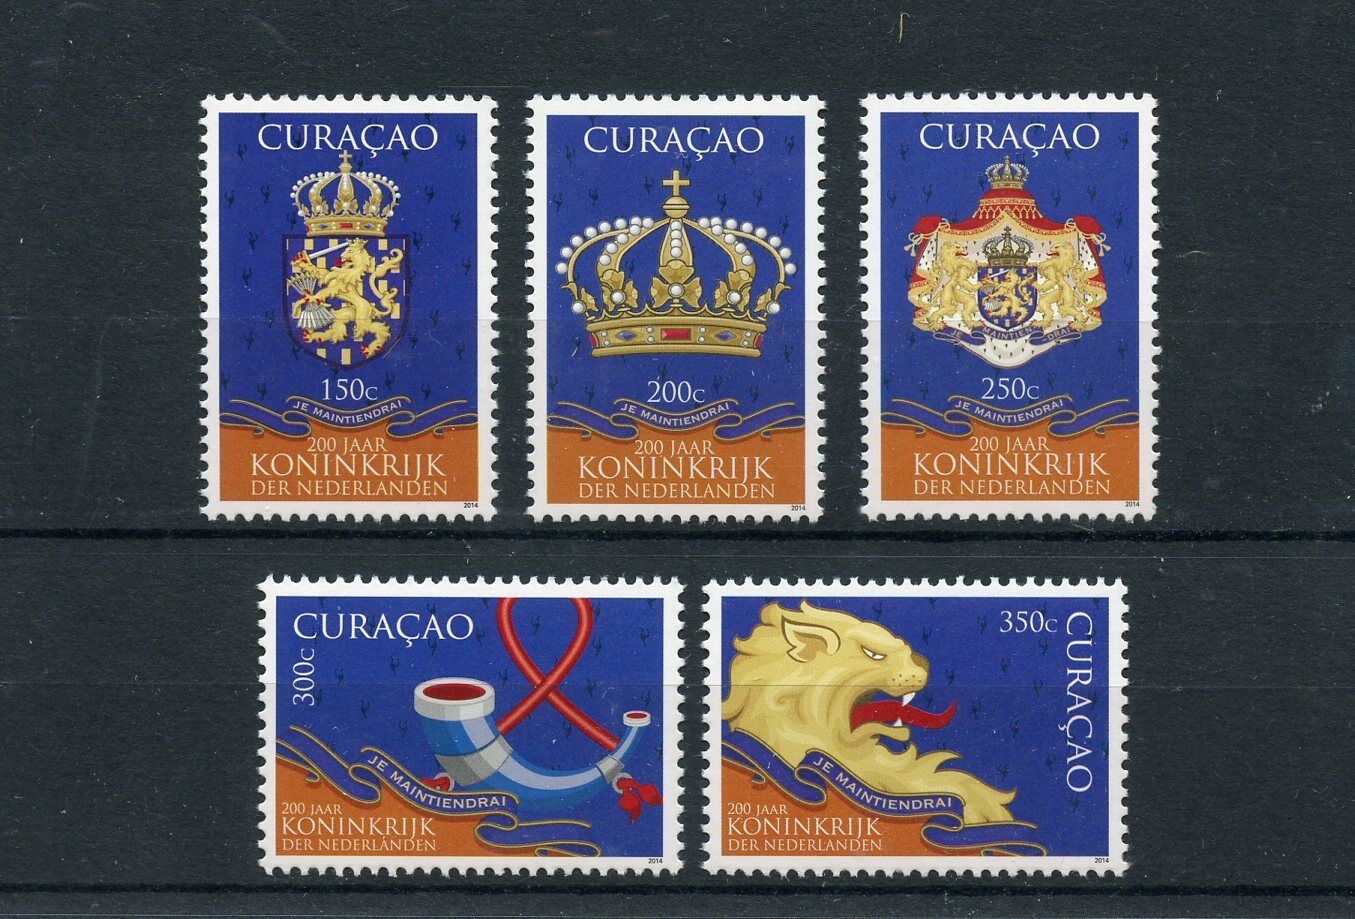 Curacao 2014 MNH Kingdom of Netherlands 200 Years 5v Set Royalty Je Maintiendrai